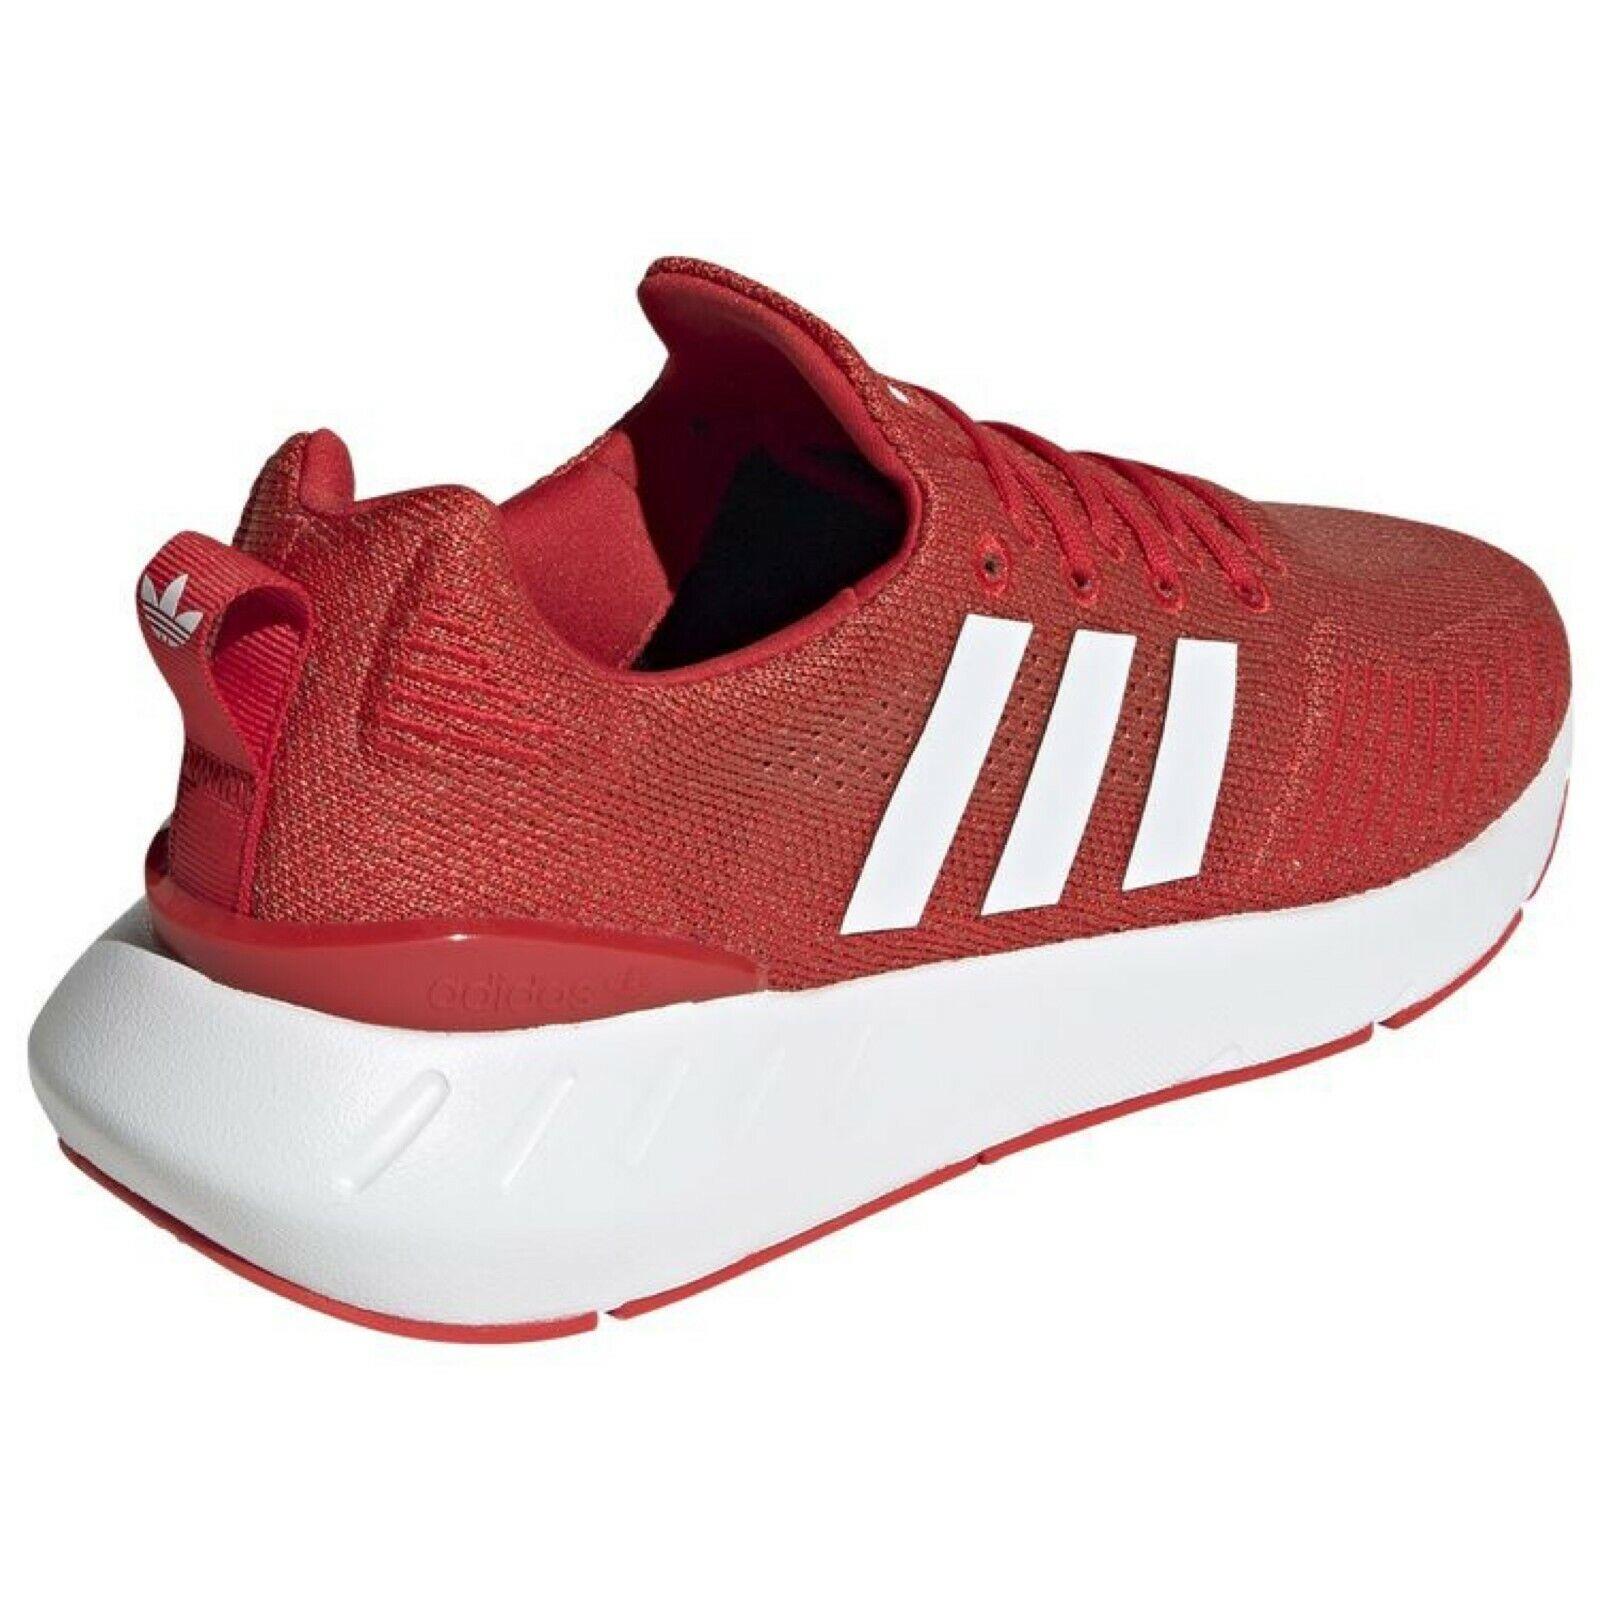 Adidas shoes Originals Swift Run - Red , Red/Black Manufacturer 3